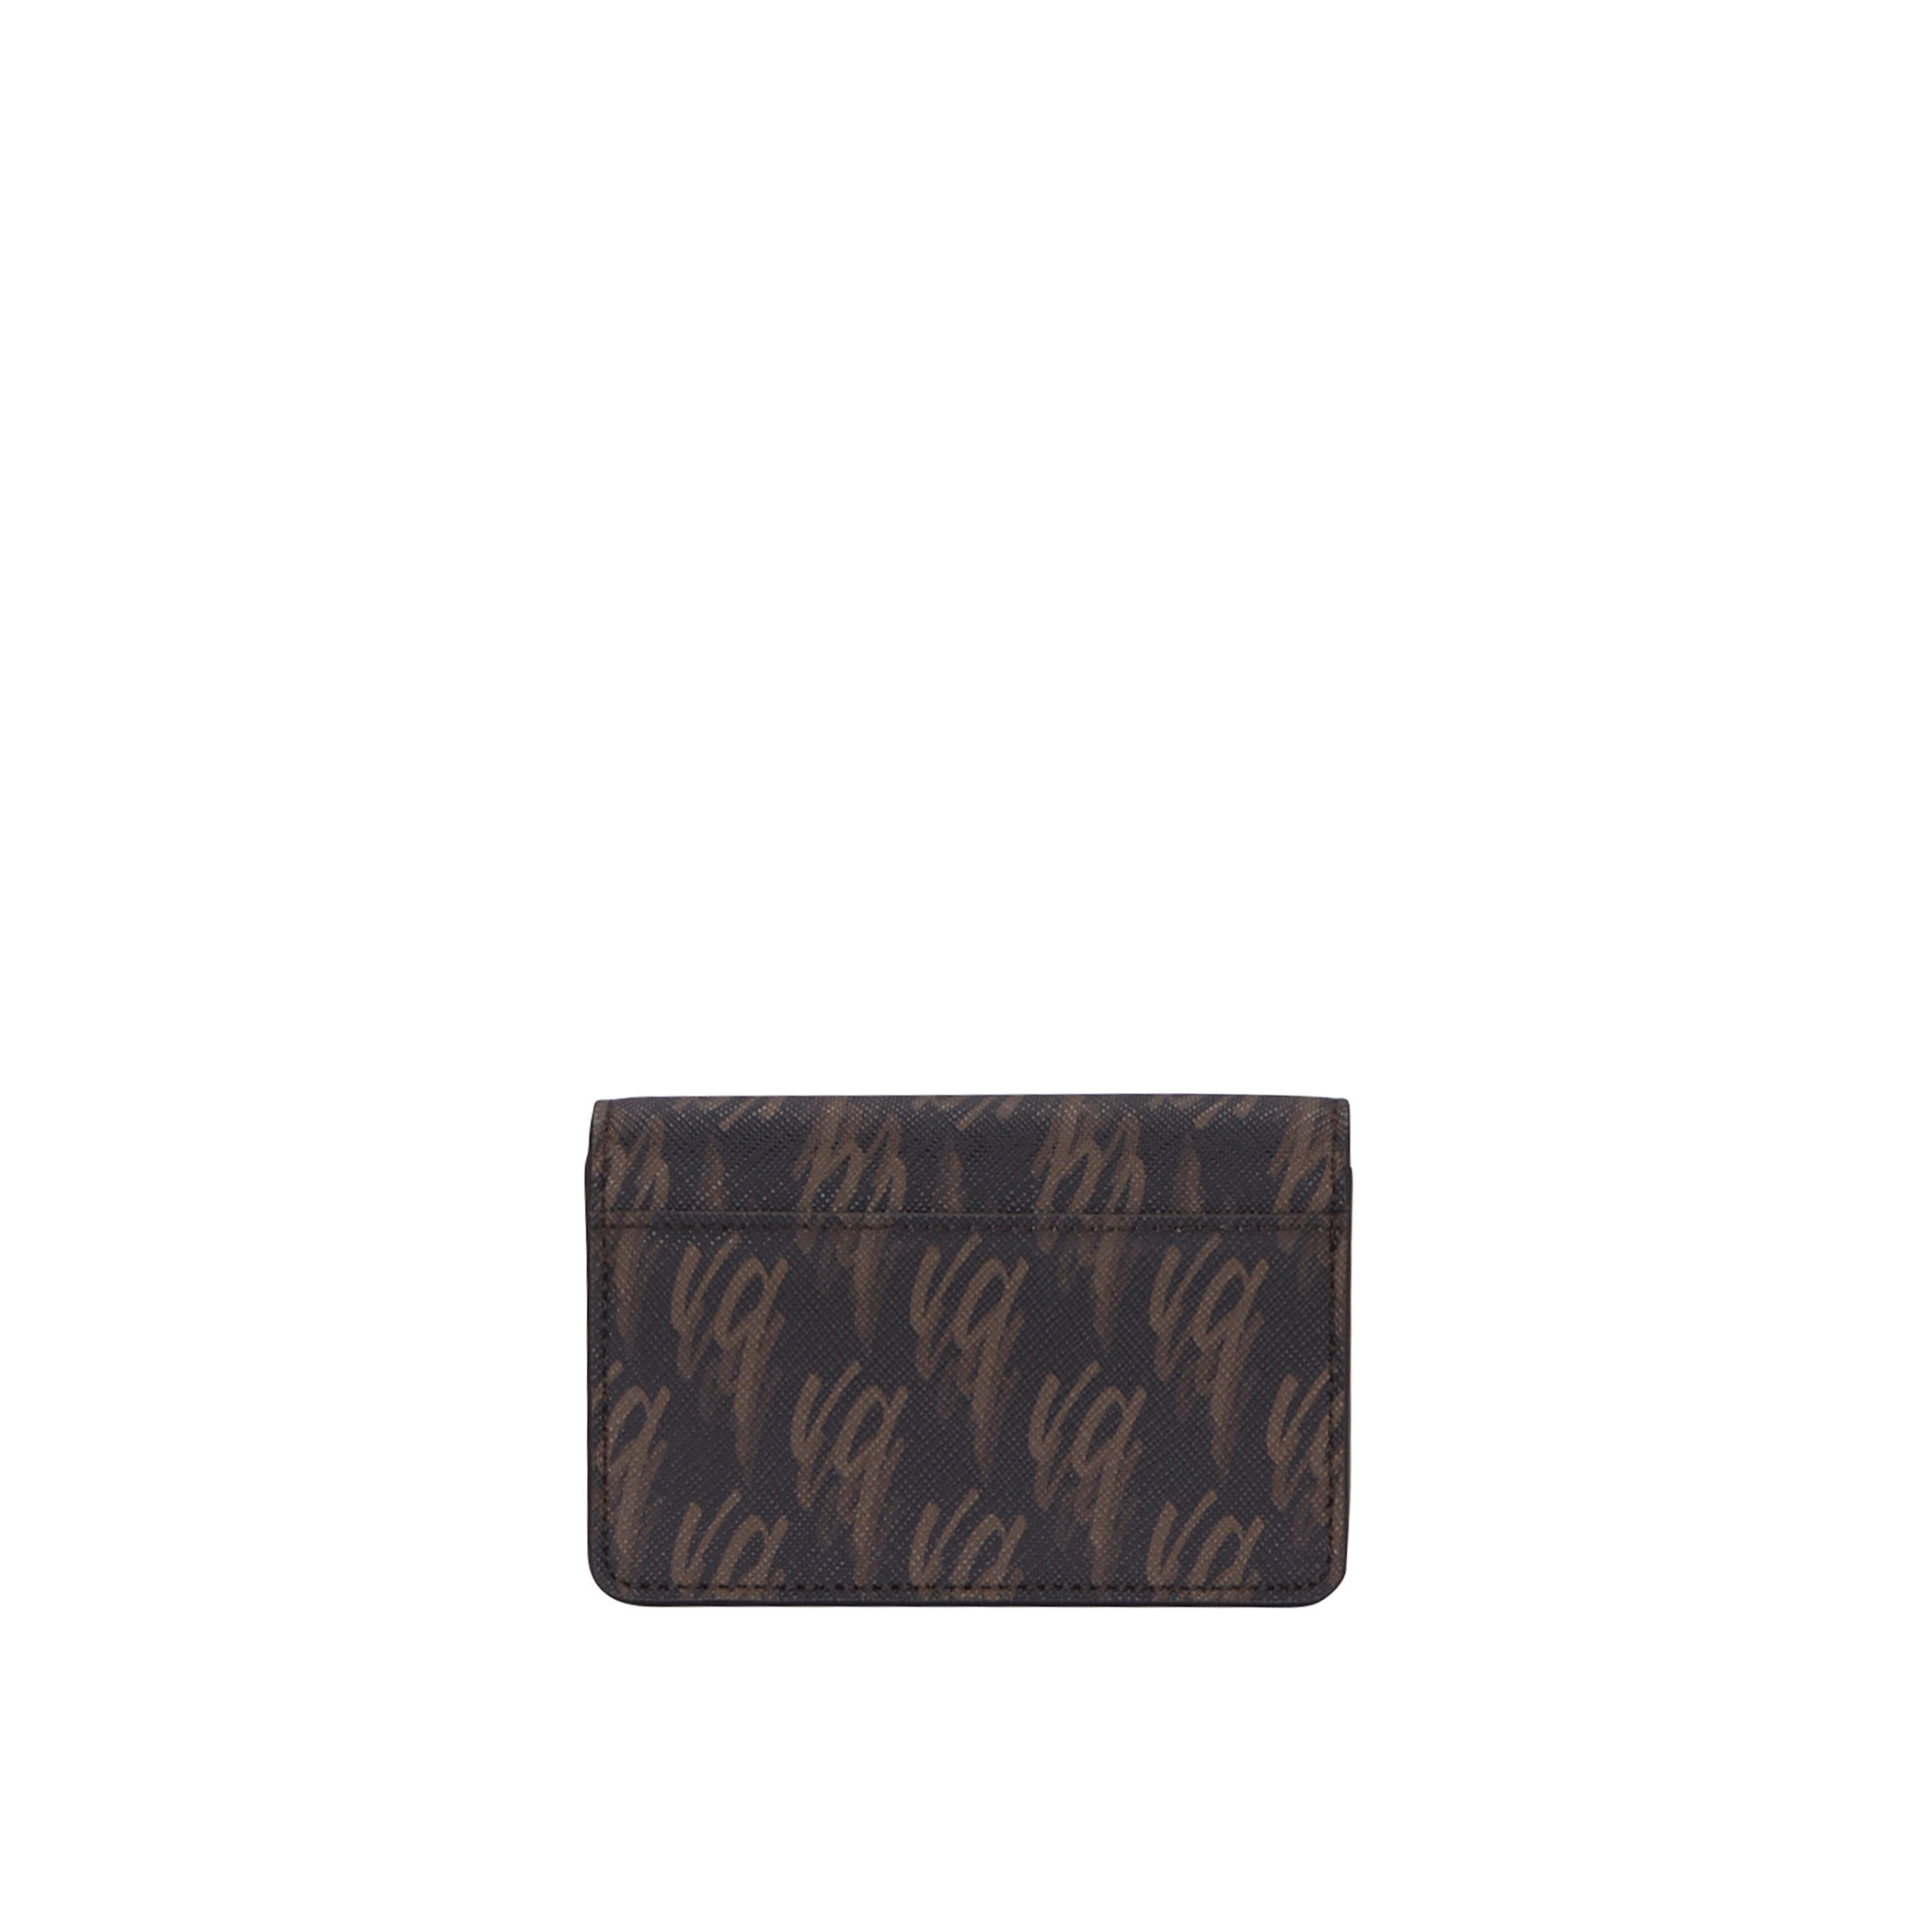 Tosee Essence Card wallet (투씨 에센스 카드지갑) Brown